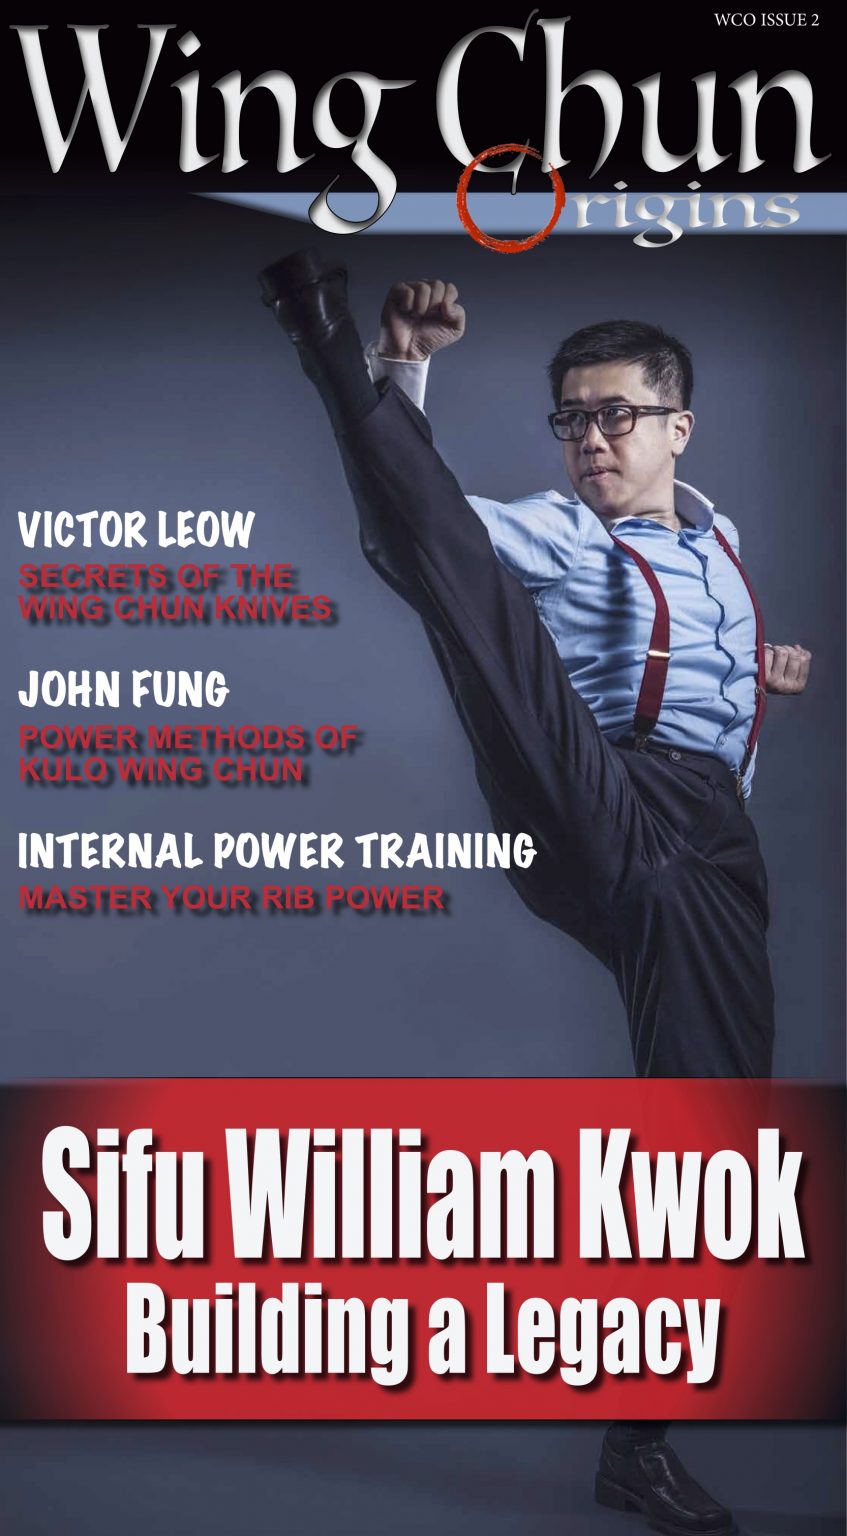 Wing Chun Origins Issue 2